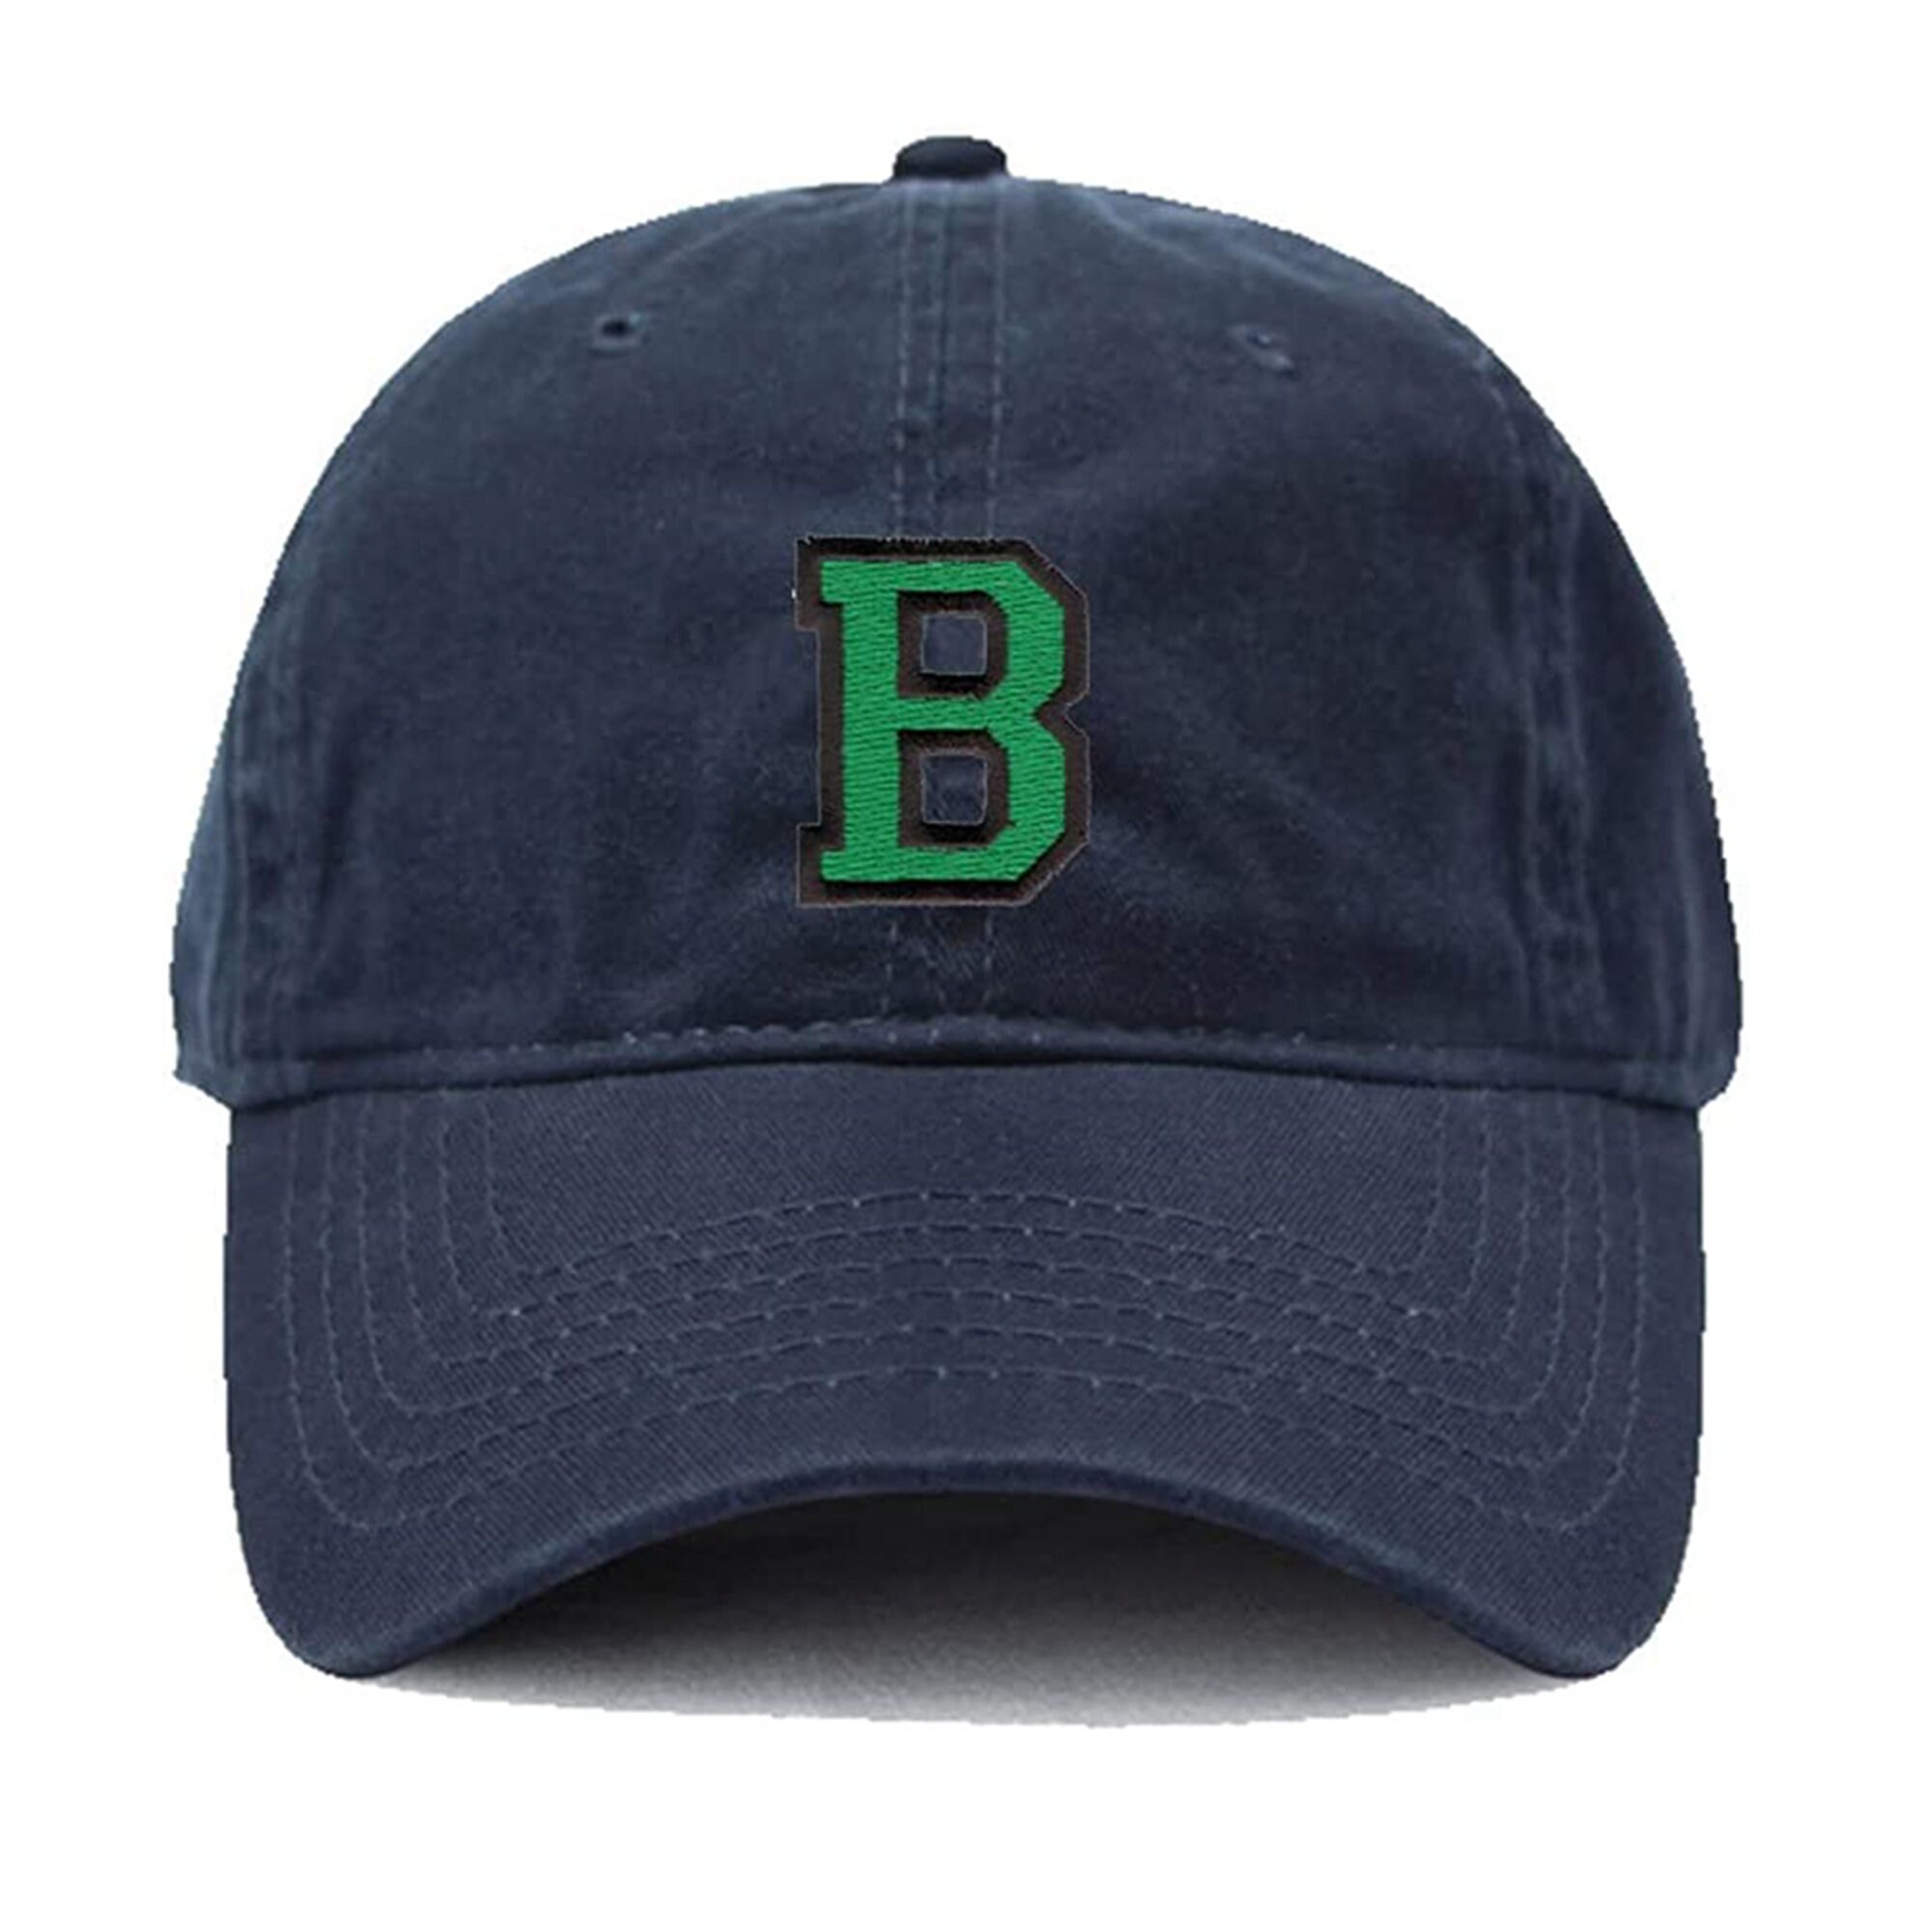 Gorras de béisbol para hombre con bordado de algodón lavado con letra B